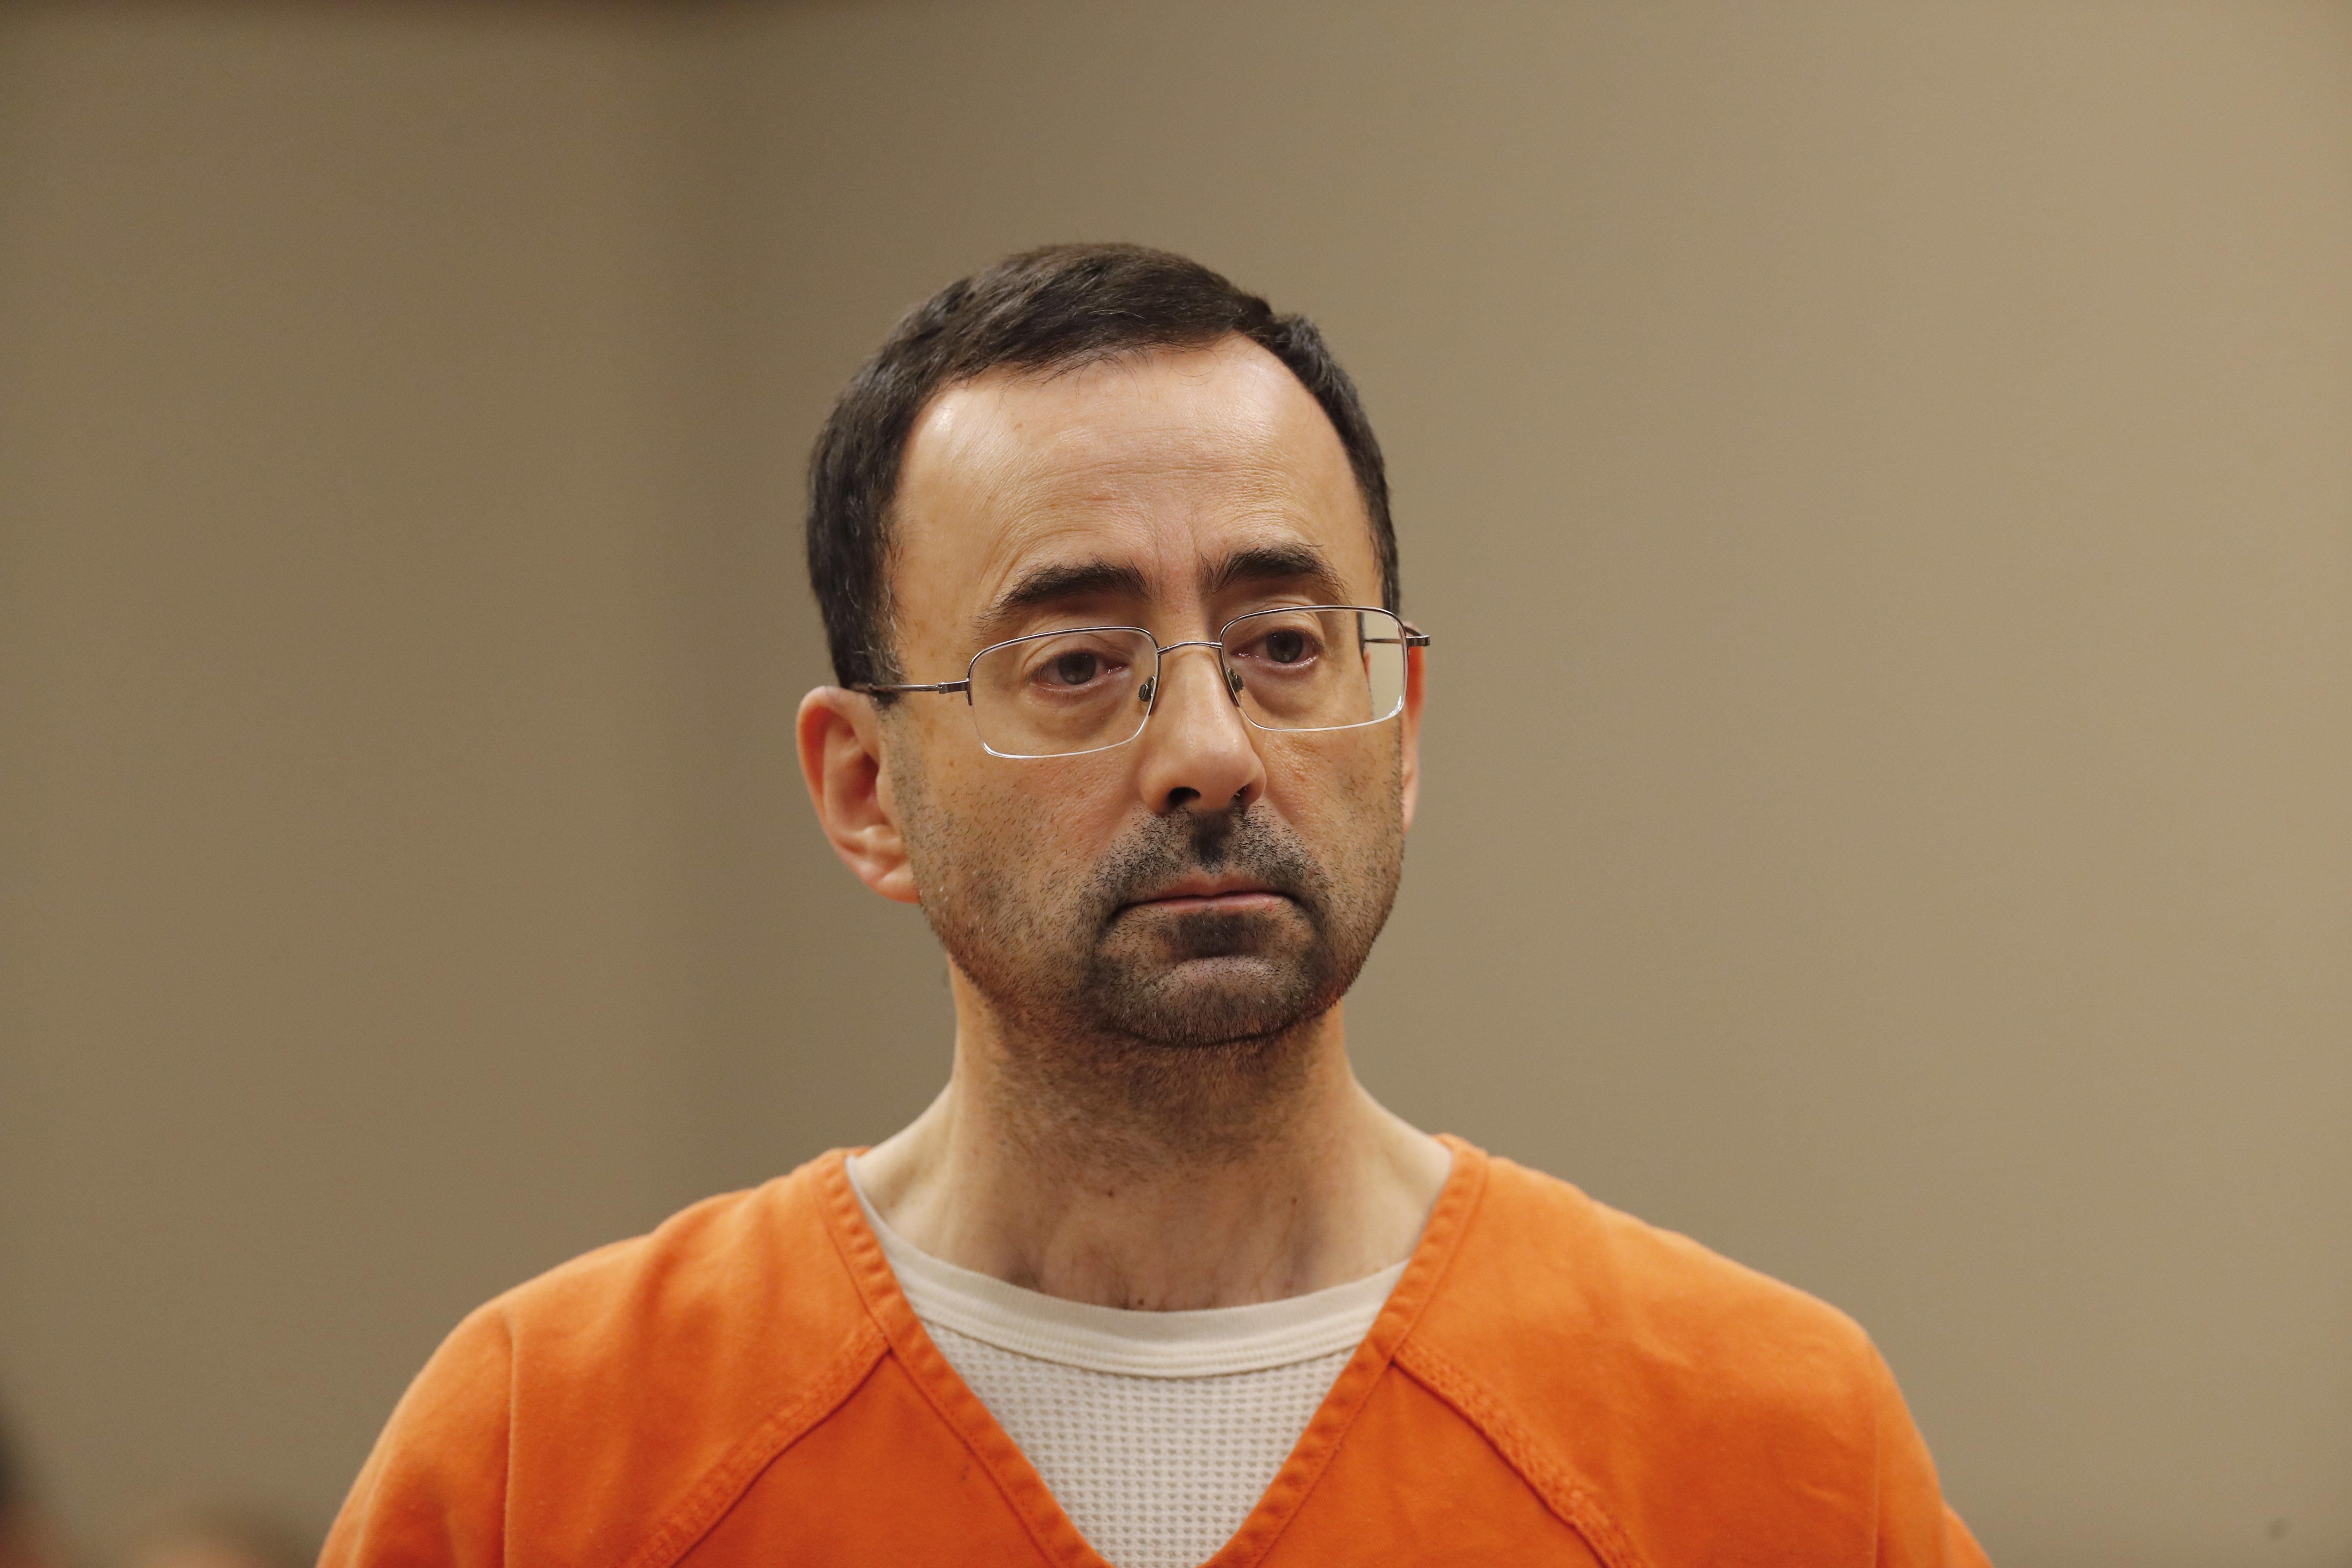 Gymnasts - USA Gymnastics doctor gets 60-year prison sentence for child ...